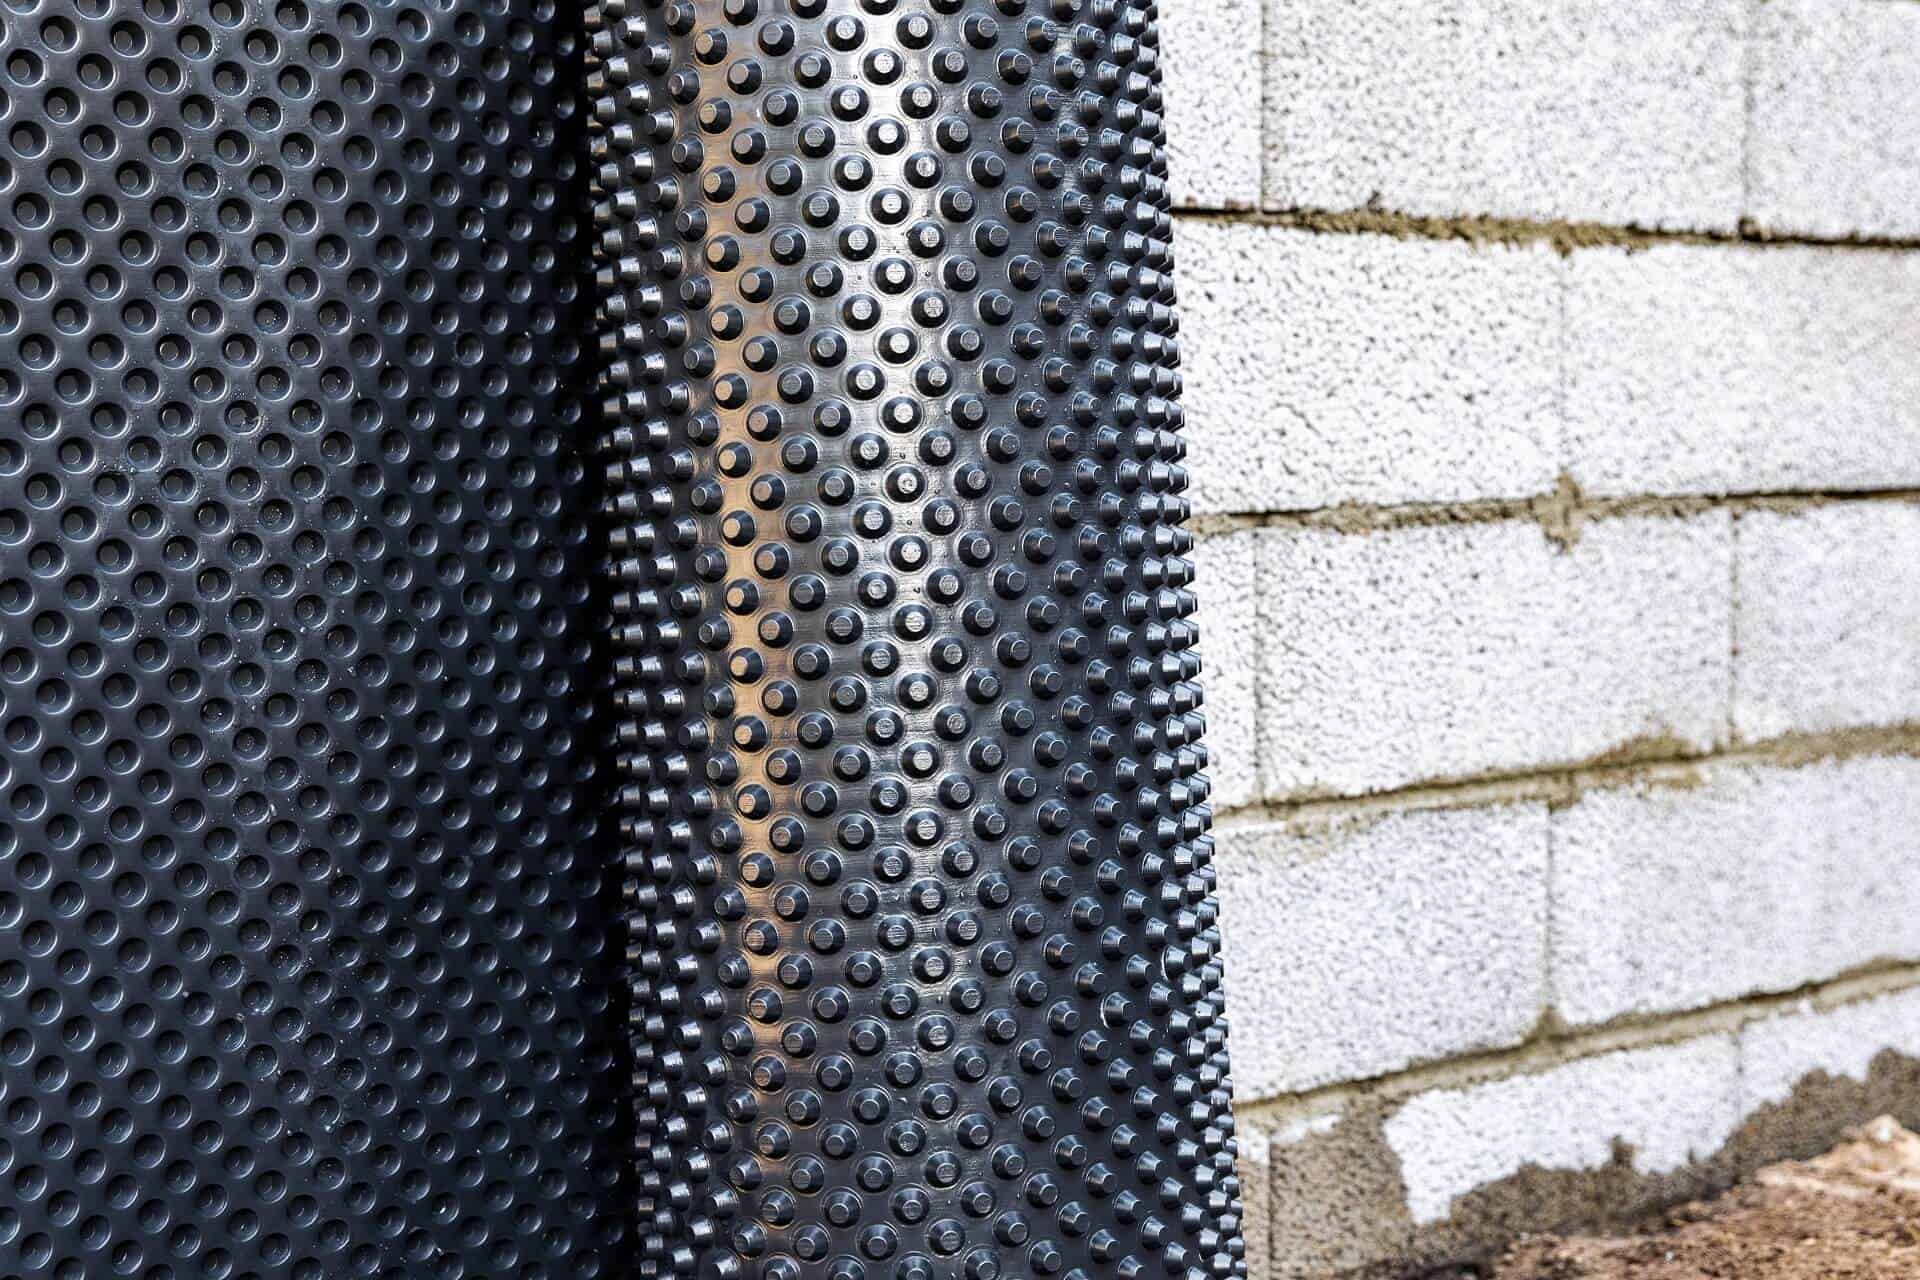 basement wall waterproofing - installing dimple geomembrane